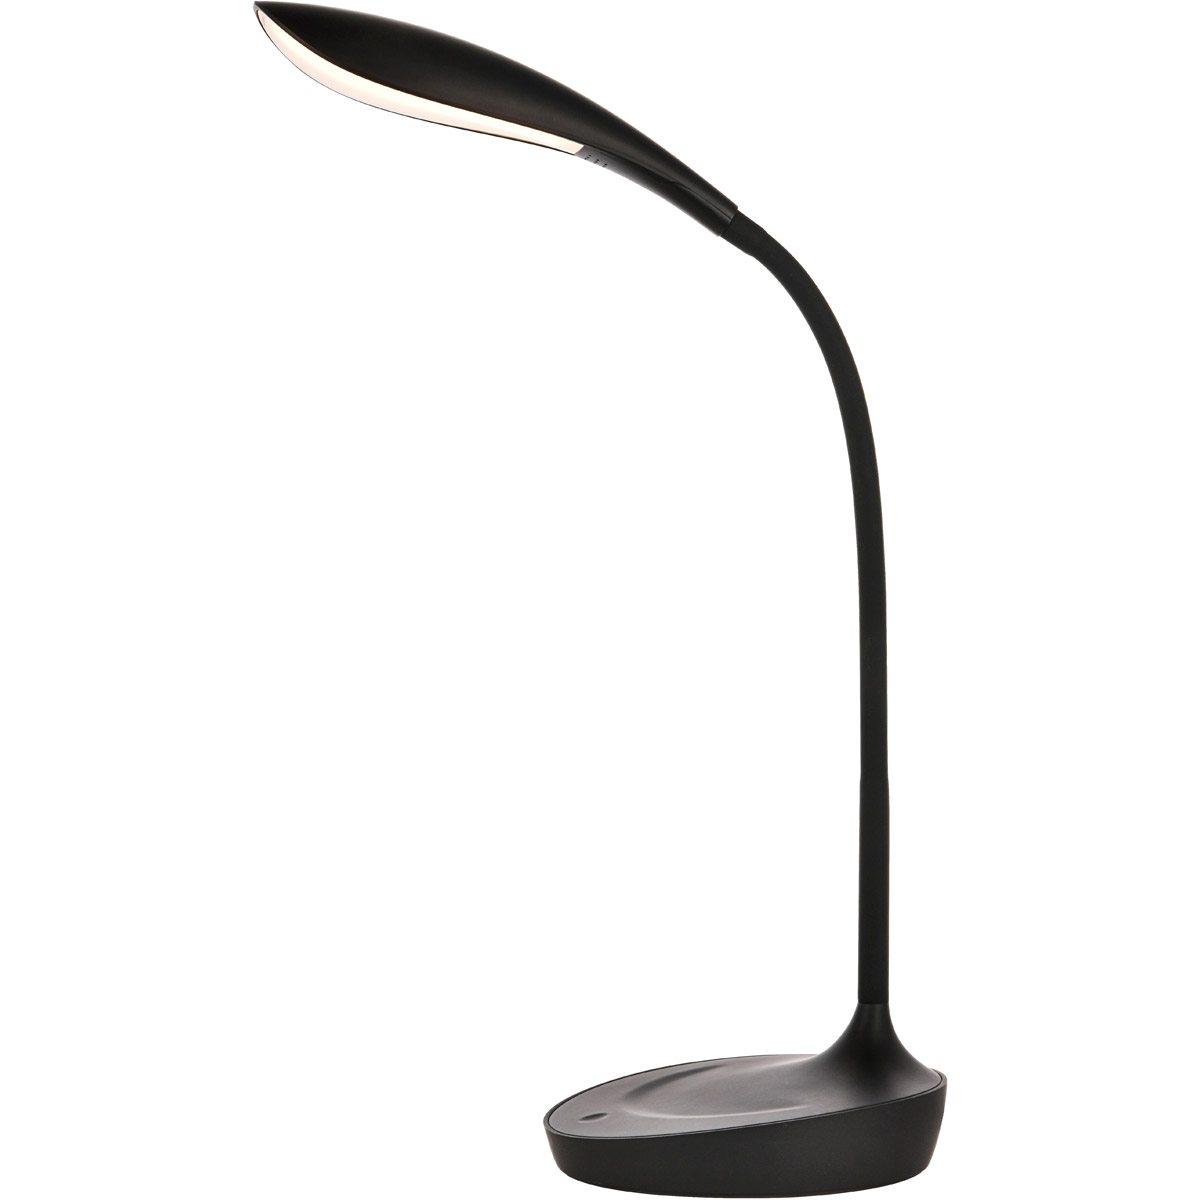 Ledds010 Sleek Led Desk Lamp With Smooth Touch Dimmer & Usb, Matte Black